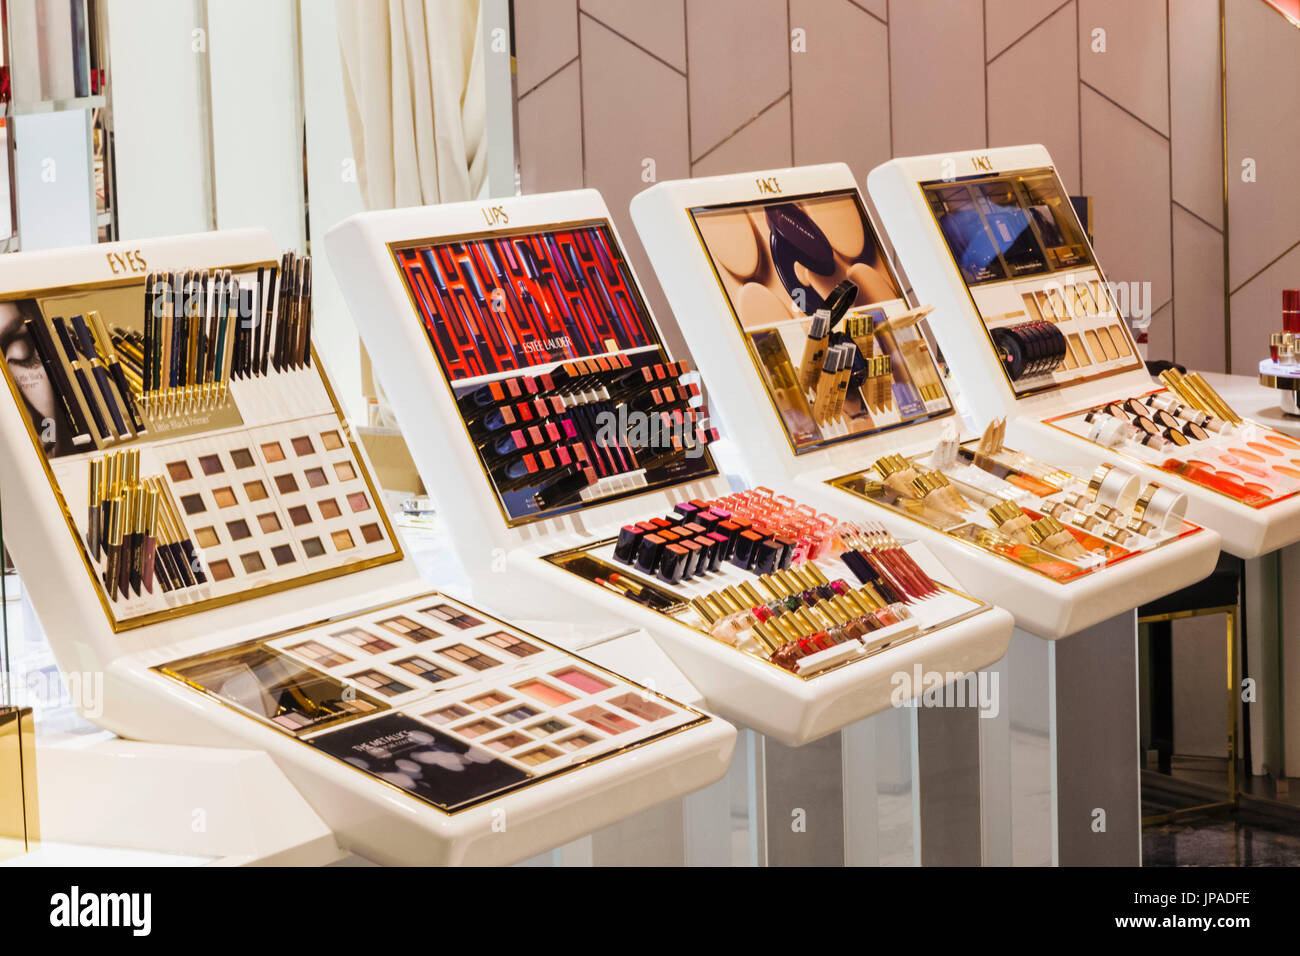 China, Hongkong, Central, IFC Shopping Mall, Estee Lauder Store, Lippenstift Display Stockfoto